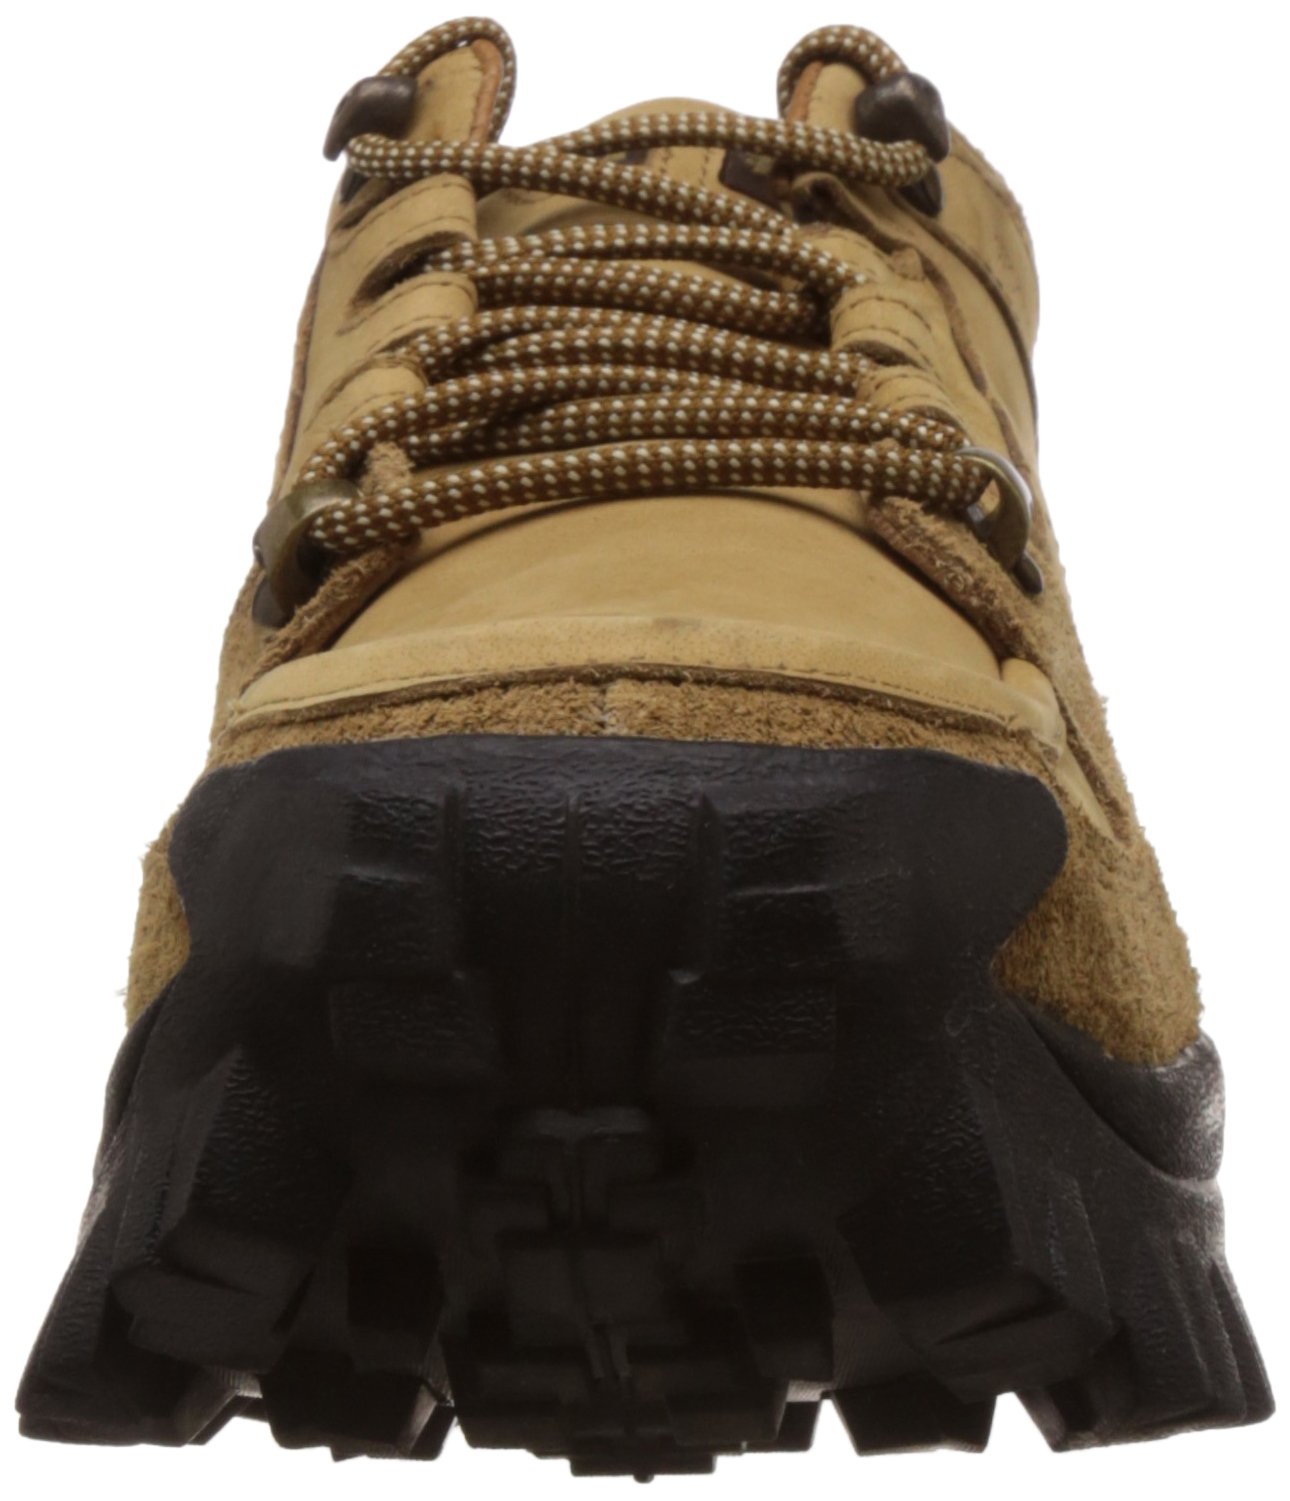 Woodland Men's Camel Leather Sneakers - 10 UK/India (44 EU)